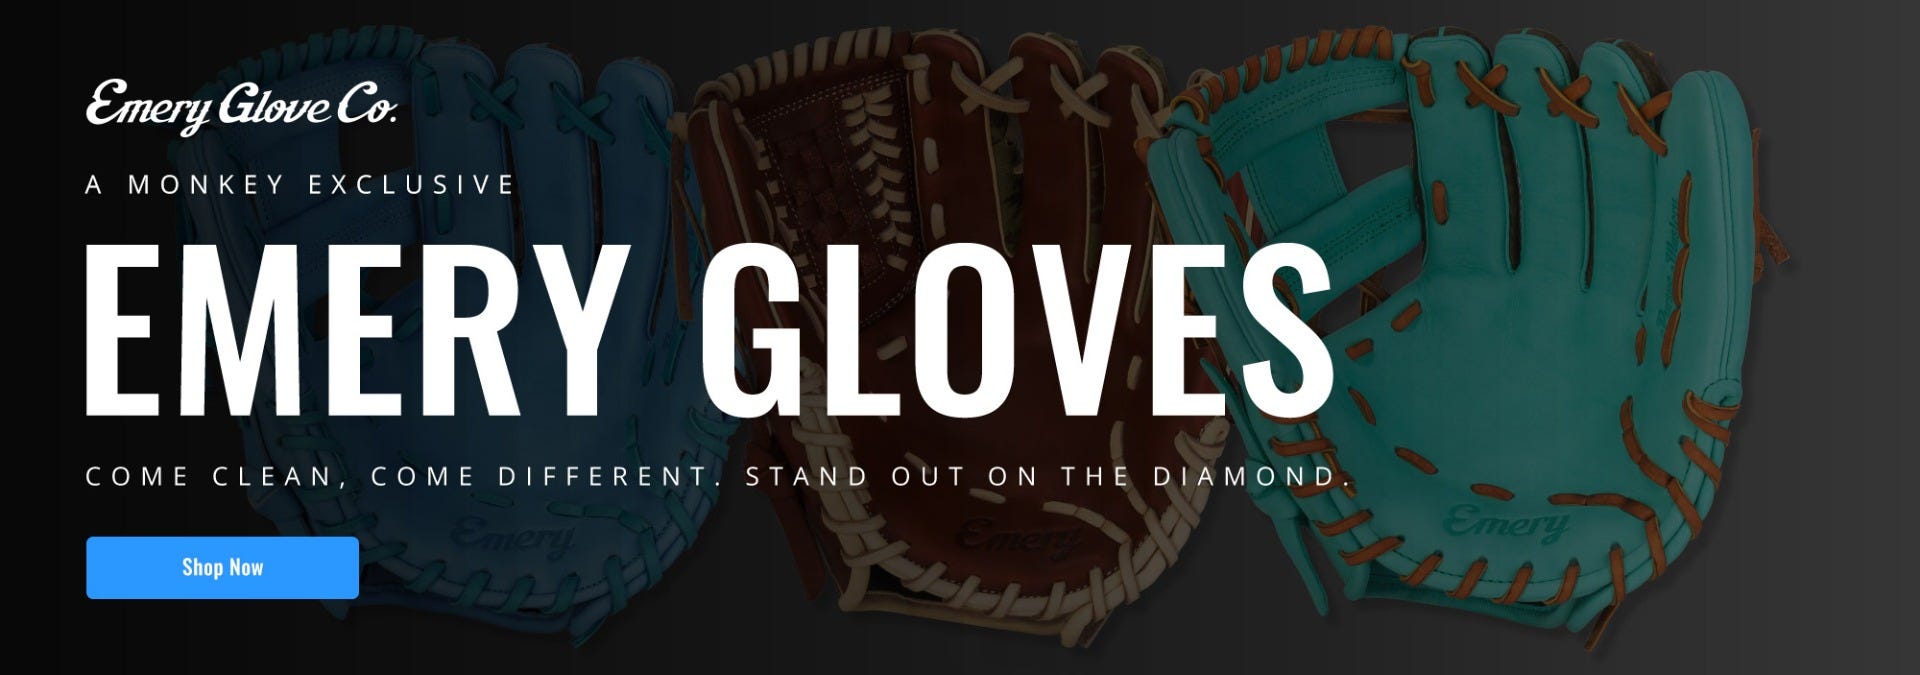 Emery Baseball Gloves: A Monkey Exclusive